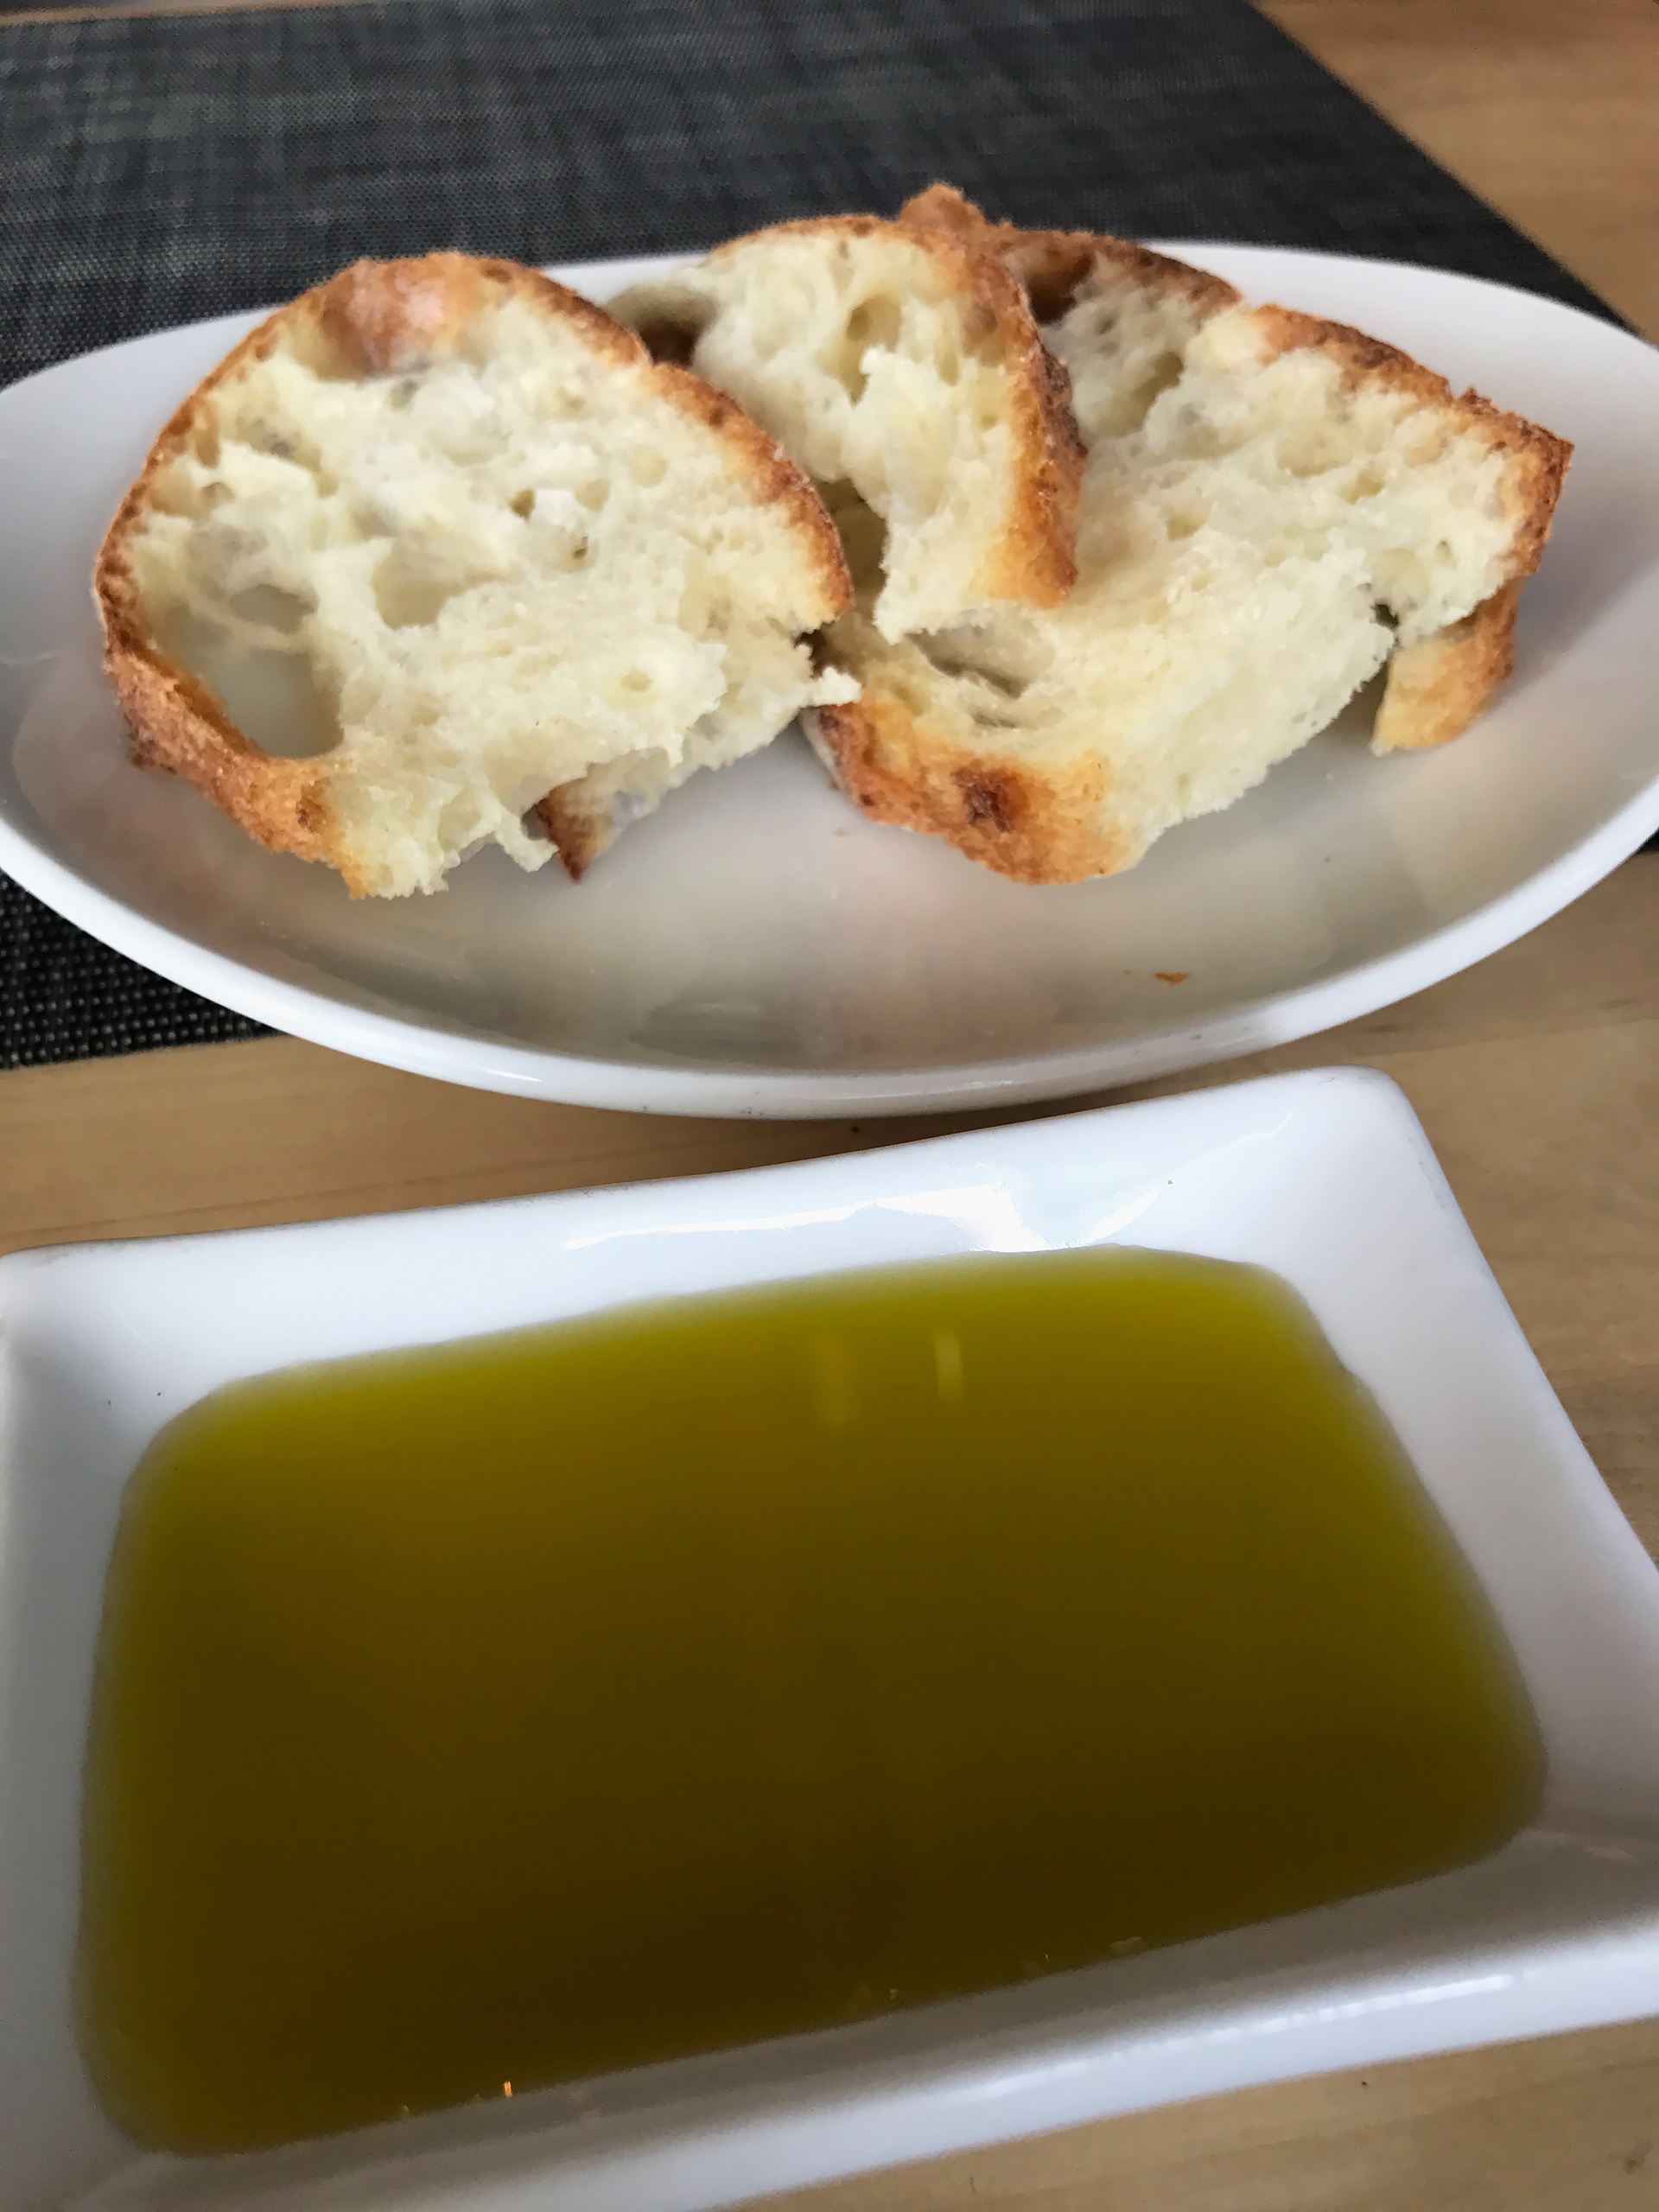 Bread service with Séka Hills olive oil.